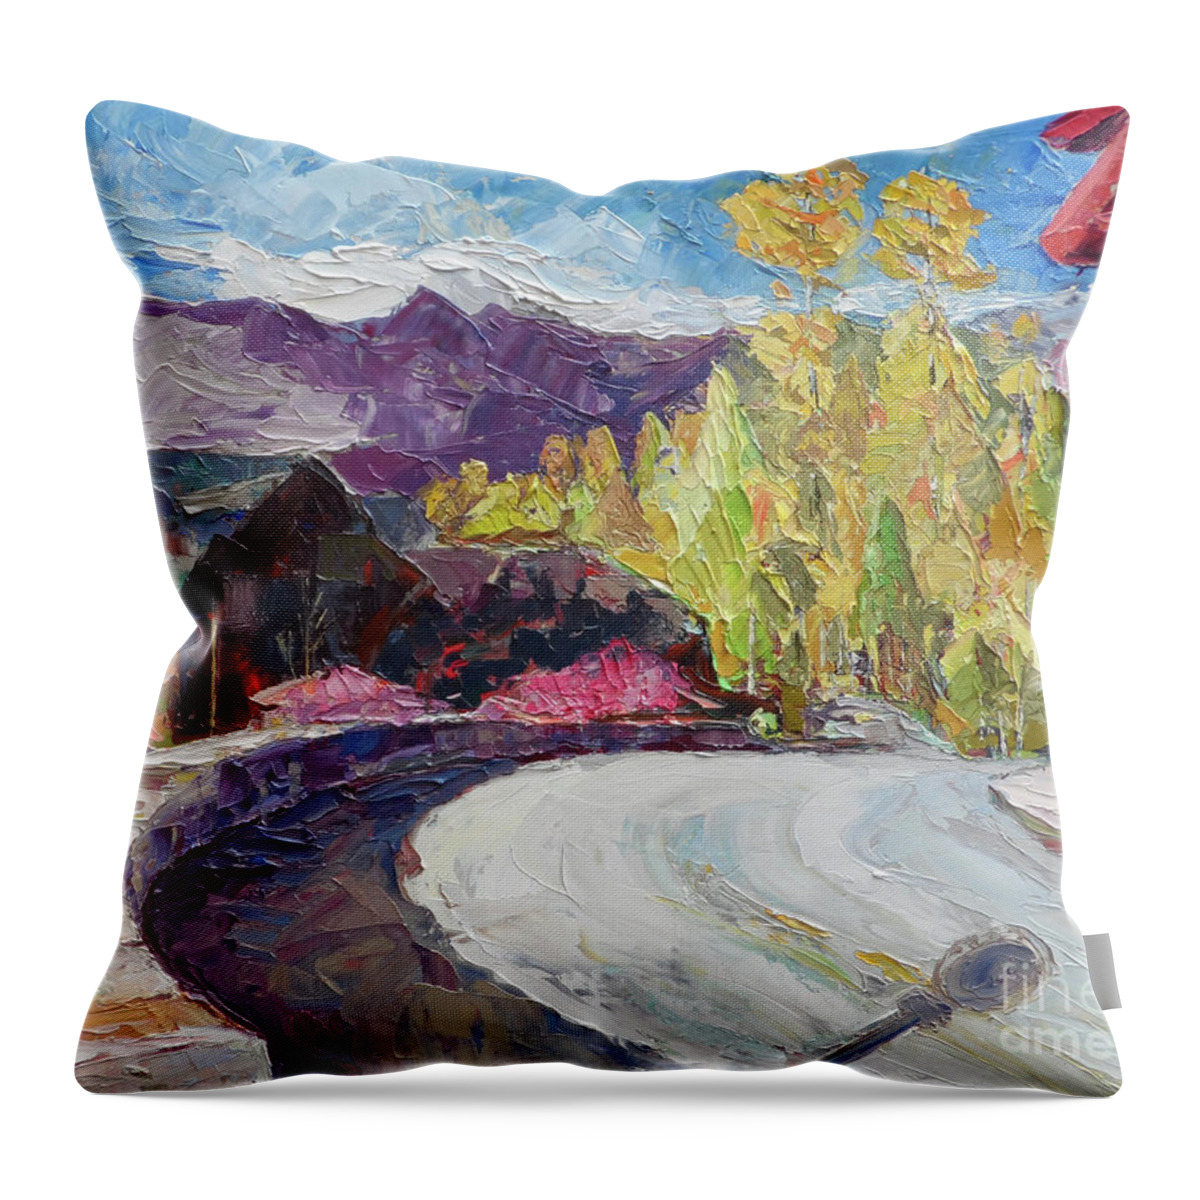 Telluride Village Throw Pillow featuring the painting Village Bridge, 2018 by PJ Kirk